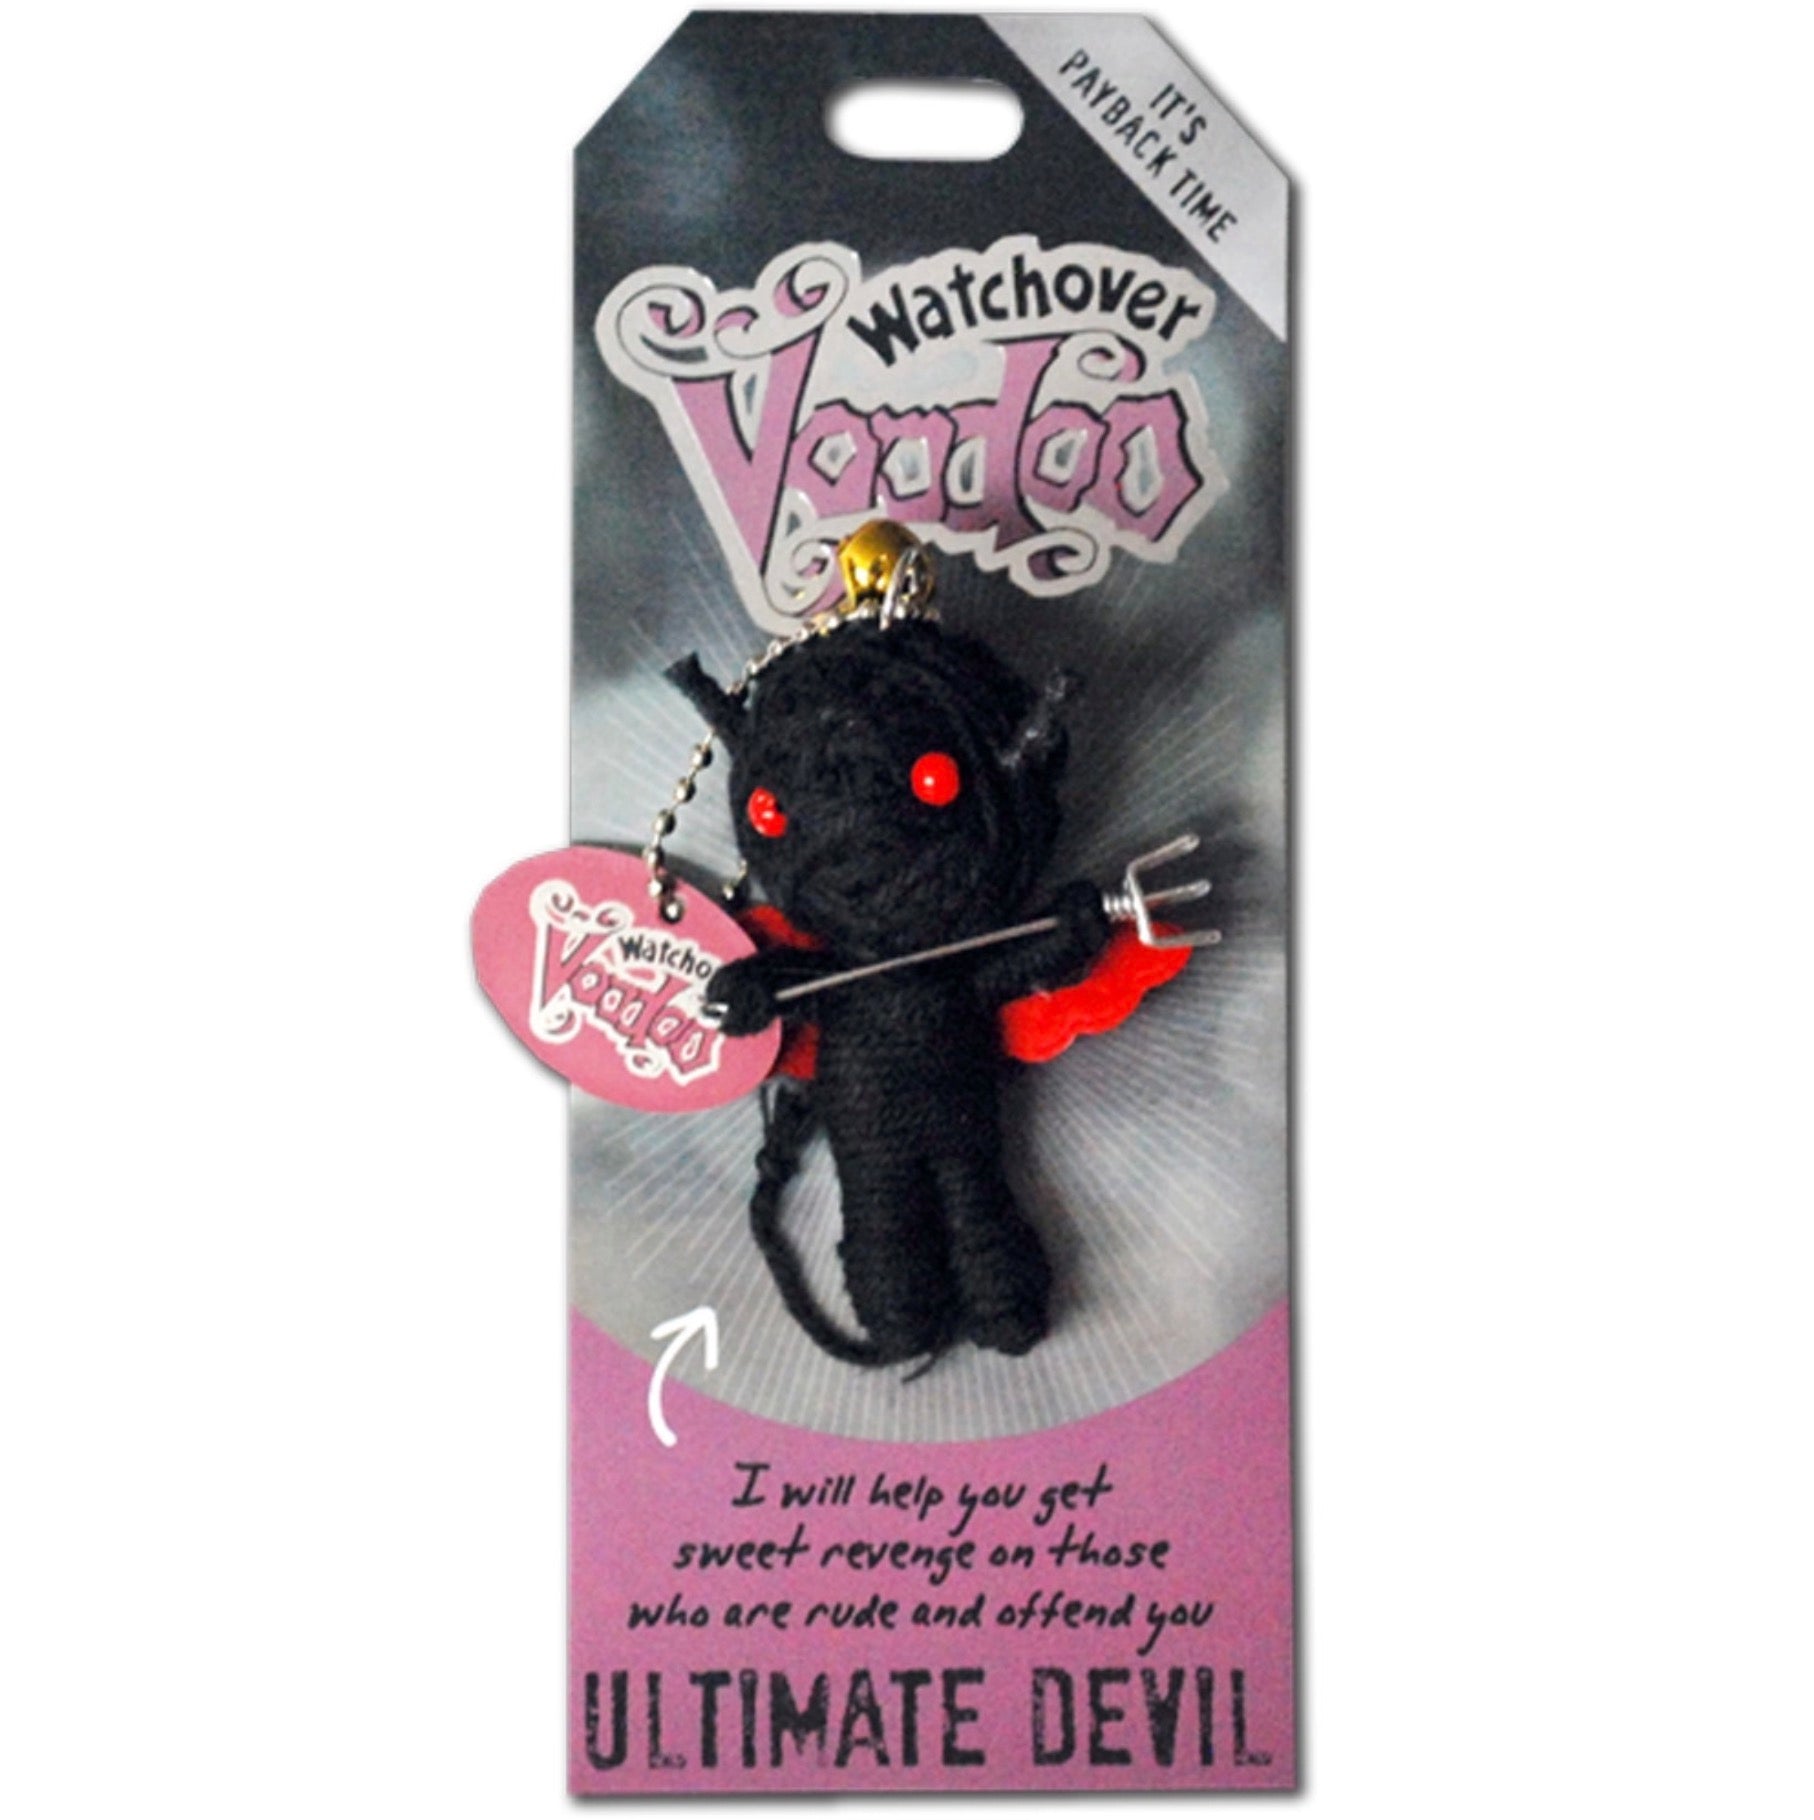 Watchover Voodoo Dolls - Ultimate Devil